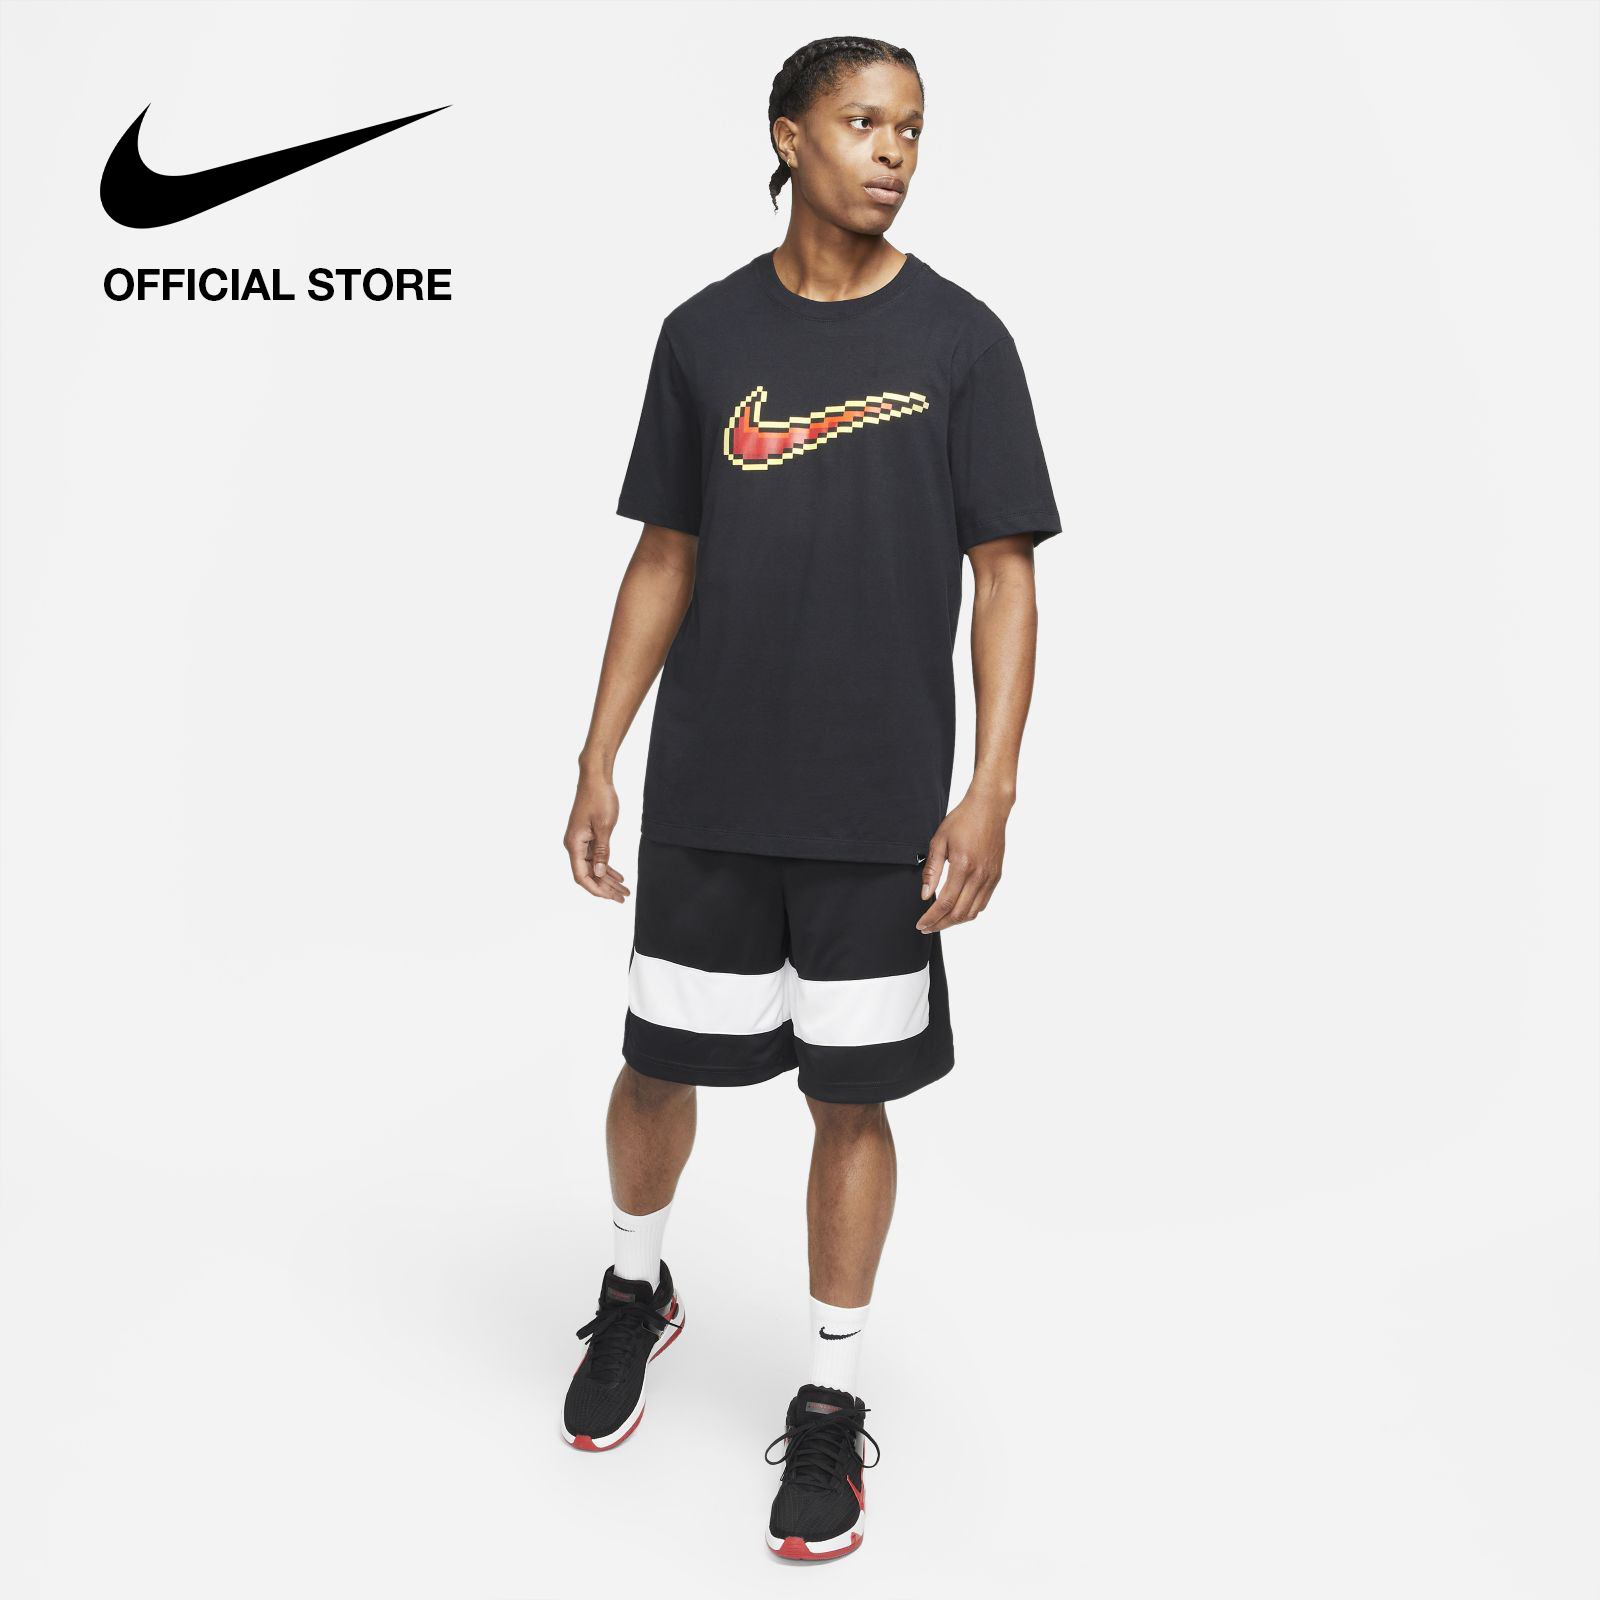 Nike Men's Swoosh T-Shirt - Black เสื้อยืดผู้ชาย Nike Swoosh - สีดำ